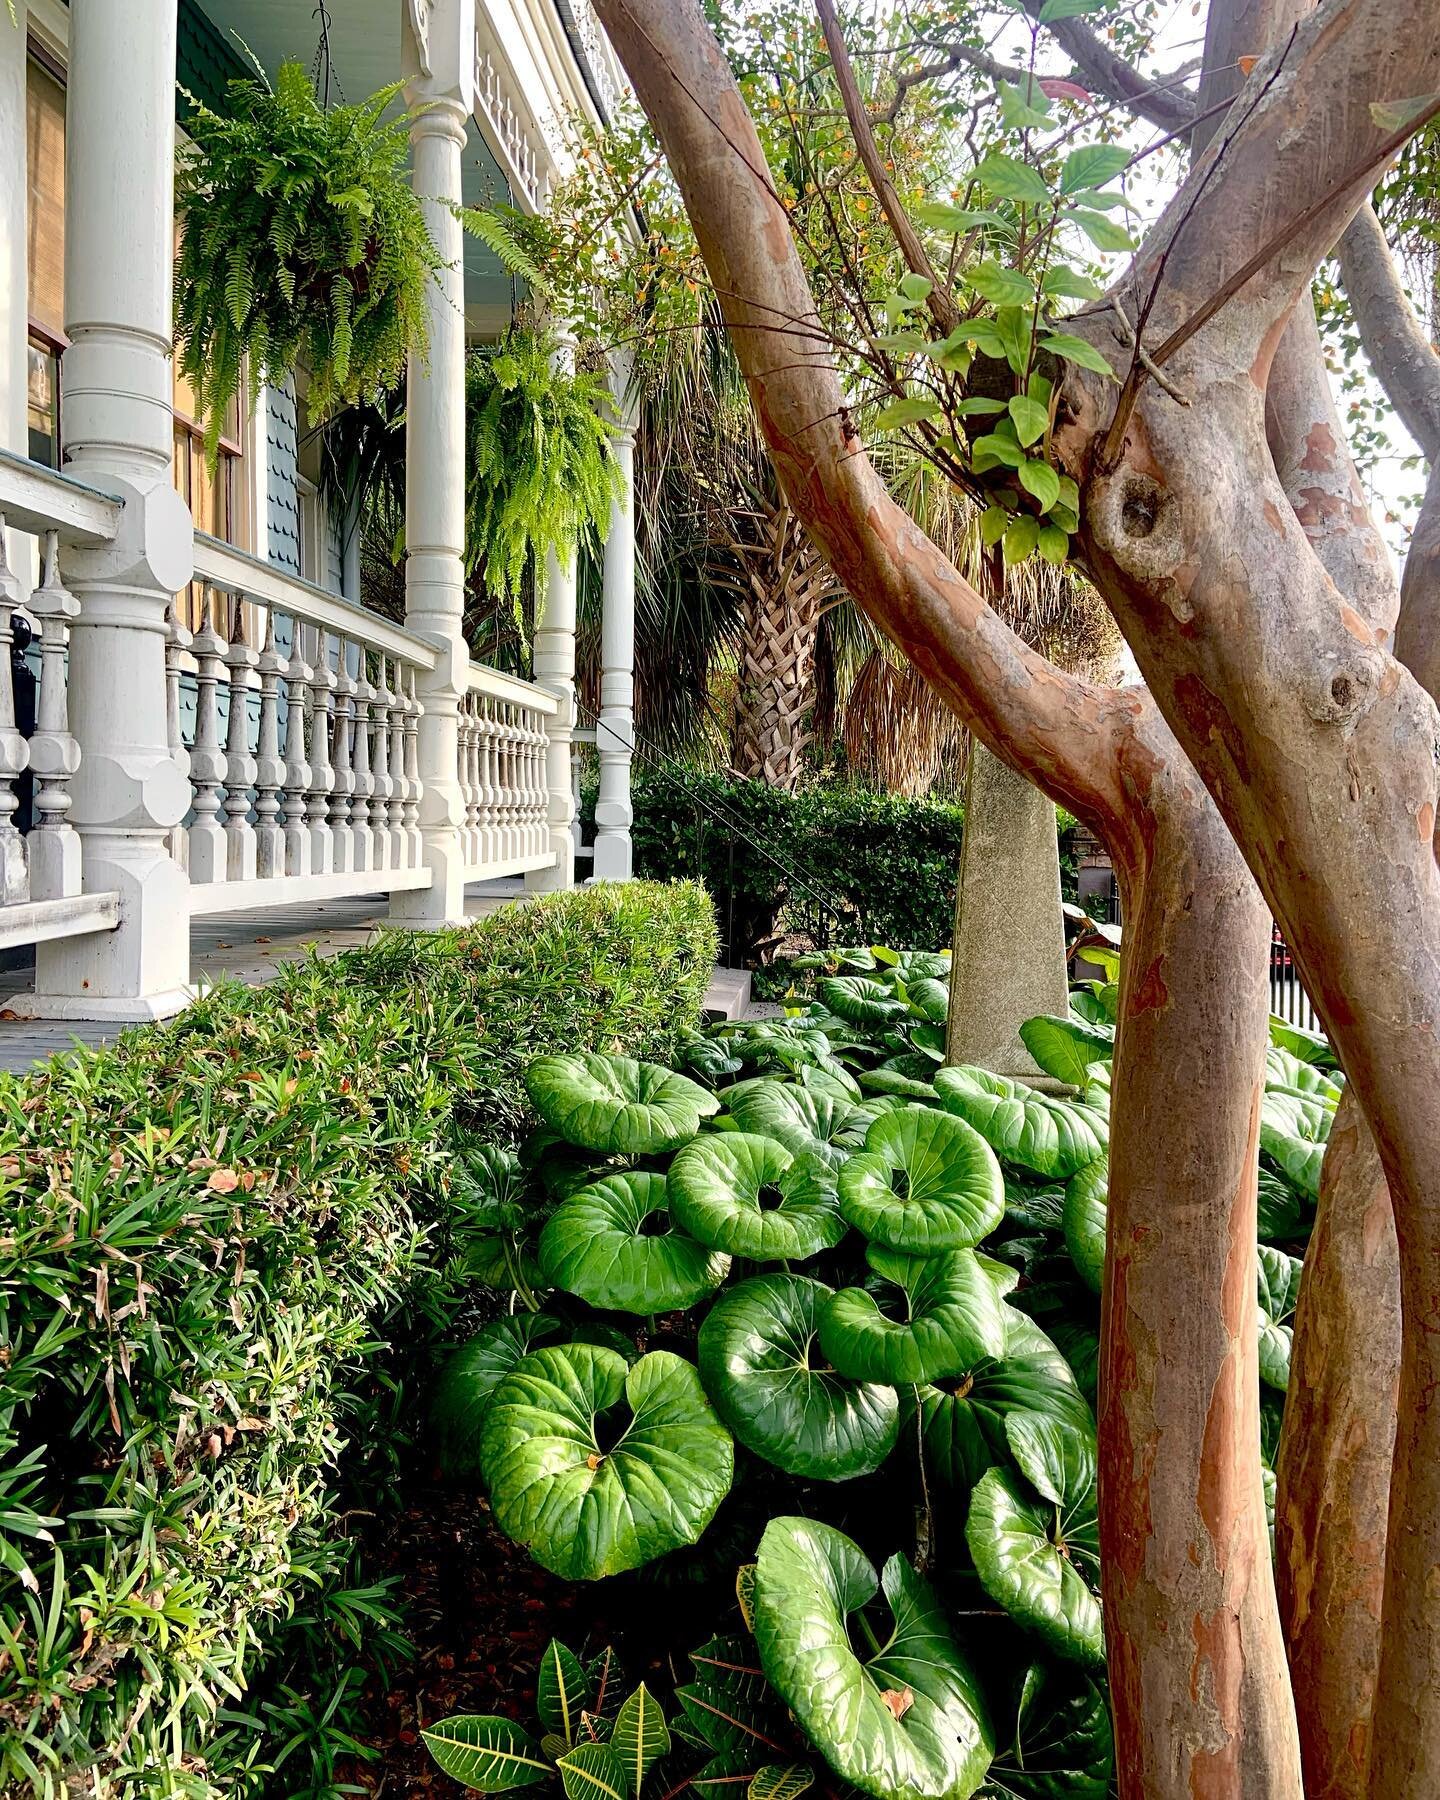 Charleston Part 11
#gardendesign #gardengates #landscapedesign #historicgardens #historicpreservation #historichomes #middletonplace #iamapld #gardeninspiration #classicgardenstyle